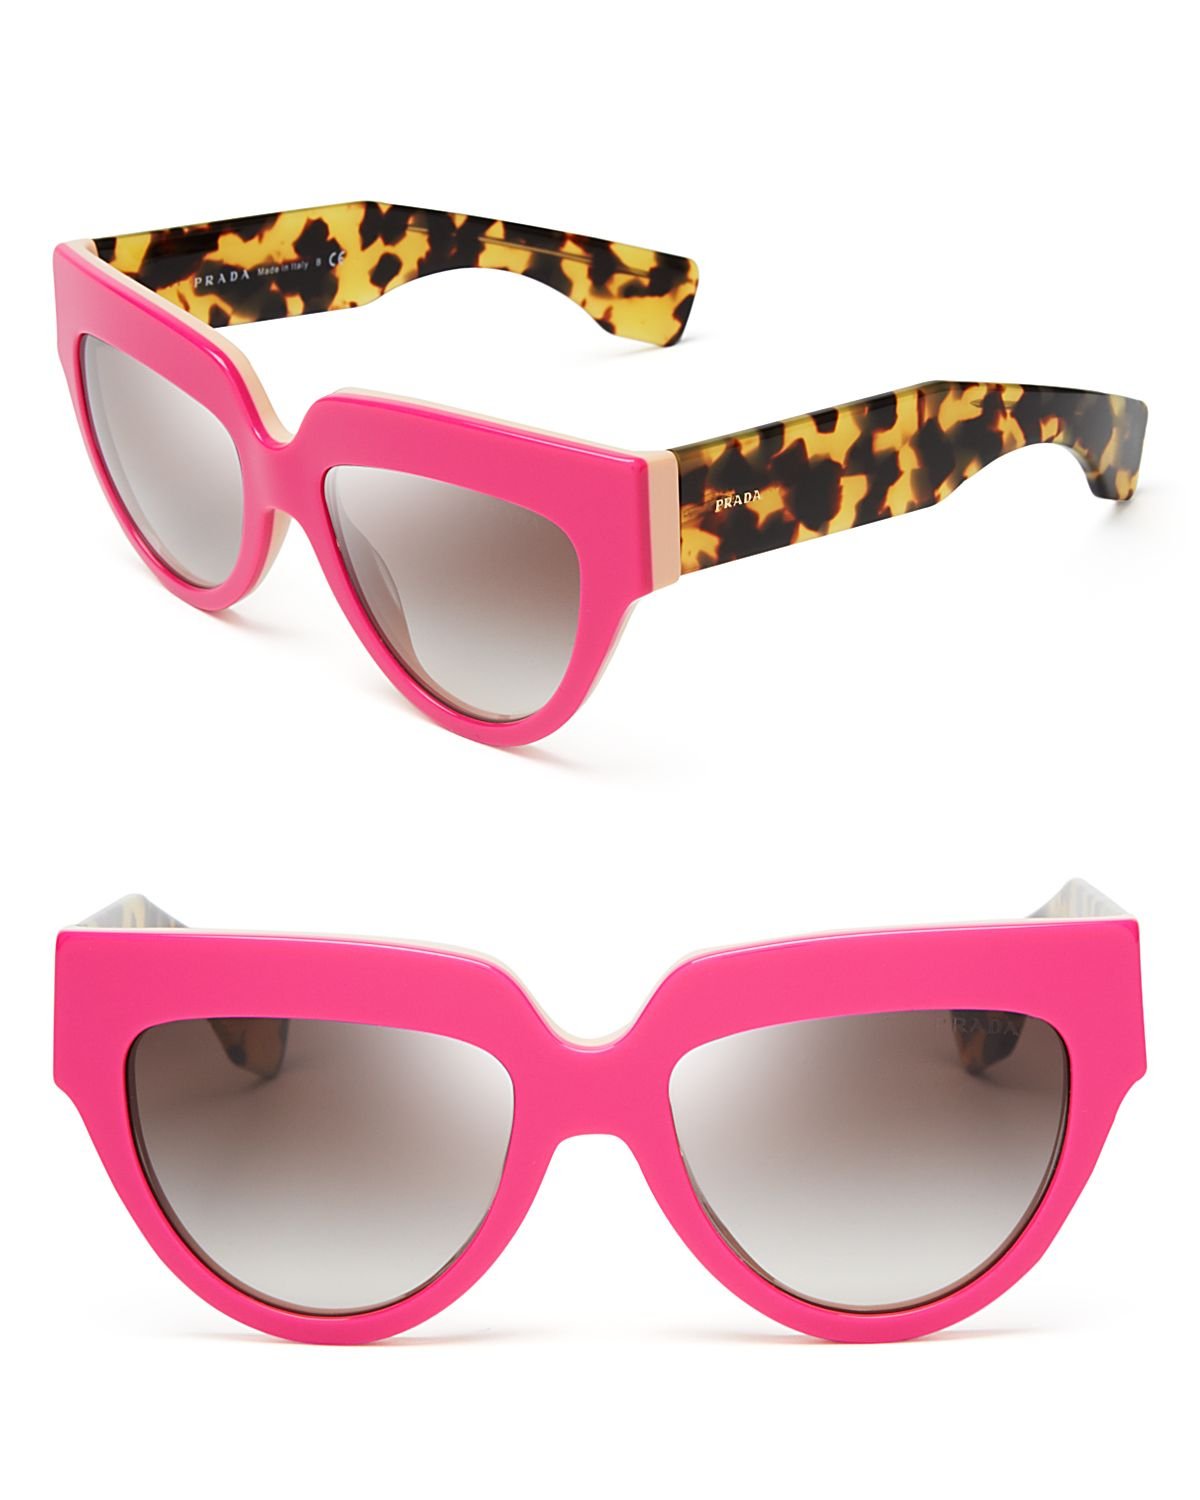 Prada Two Tone Cat Eye Sunglasses in Fuschia/Beige (Pink) - Lyst